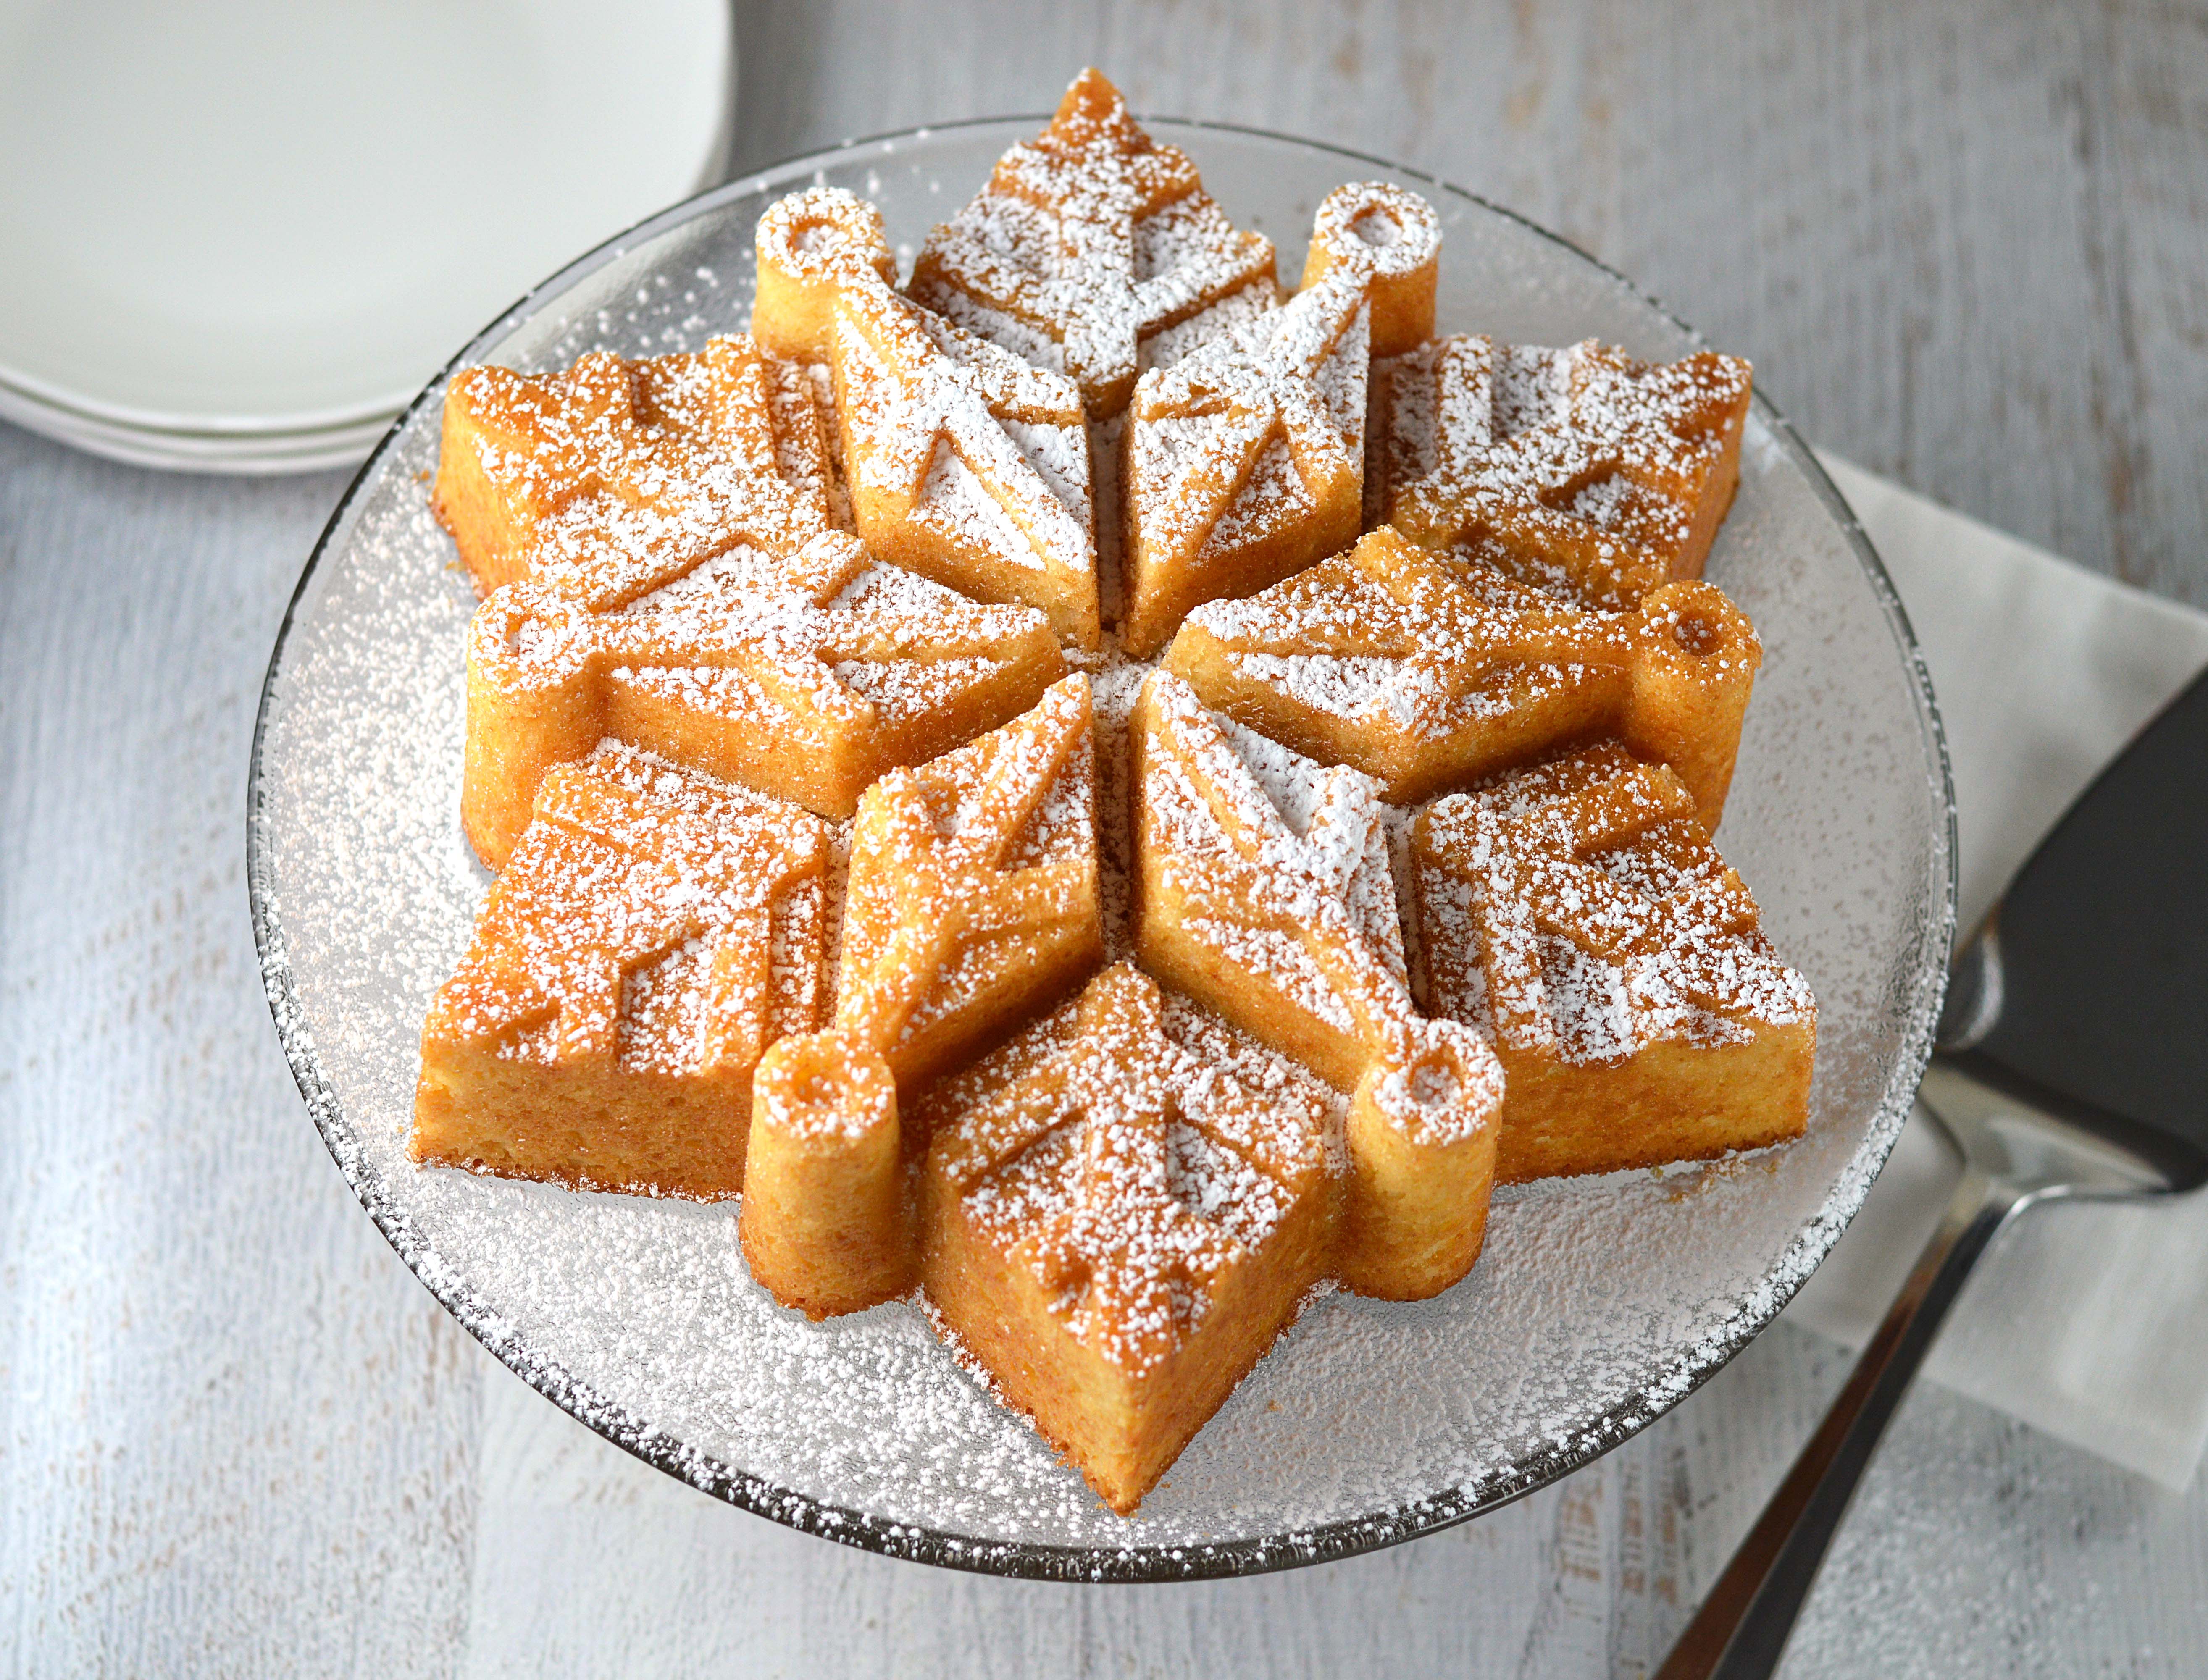 http://www.fridaycakenight.com/wp-content/uploads/2015/01/Almond-snowflake-cake1.jpg